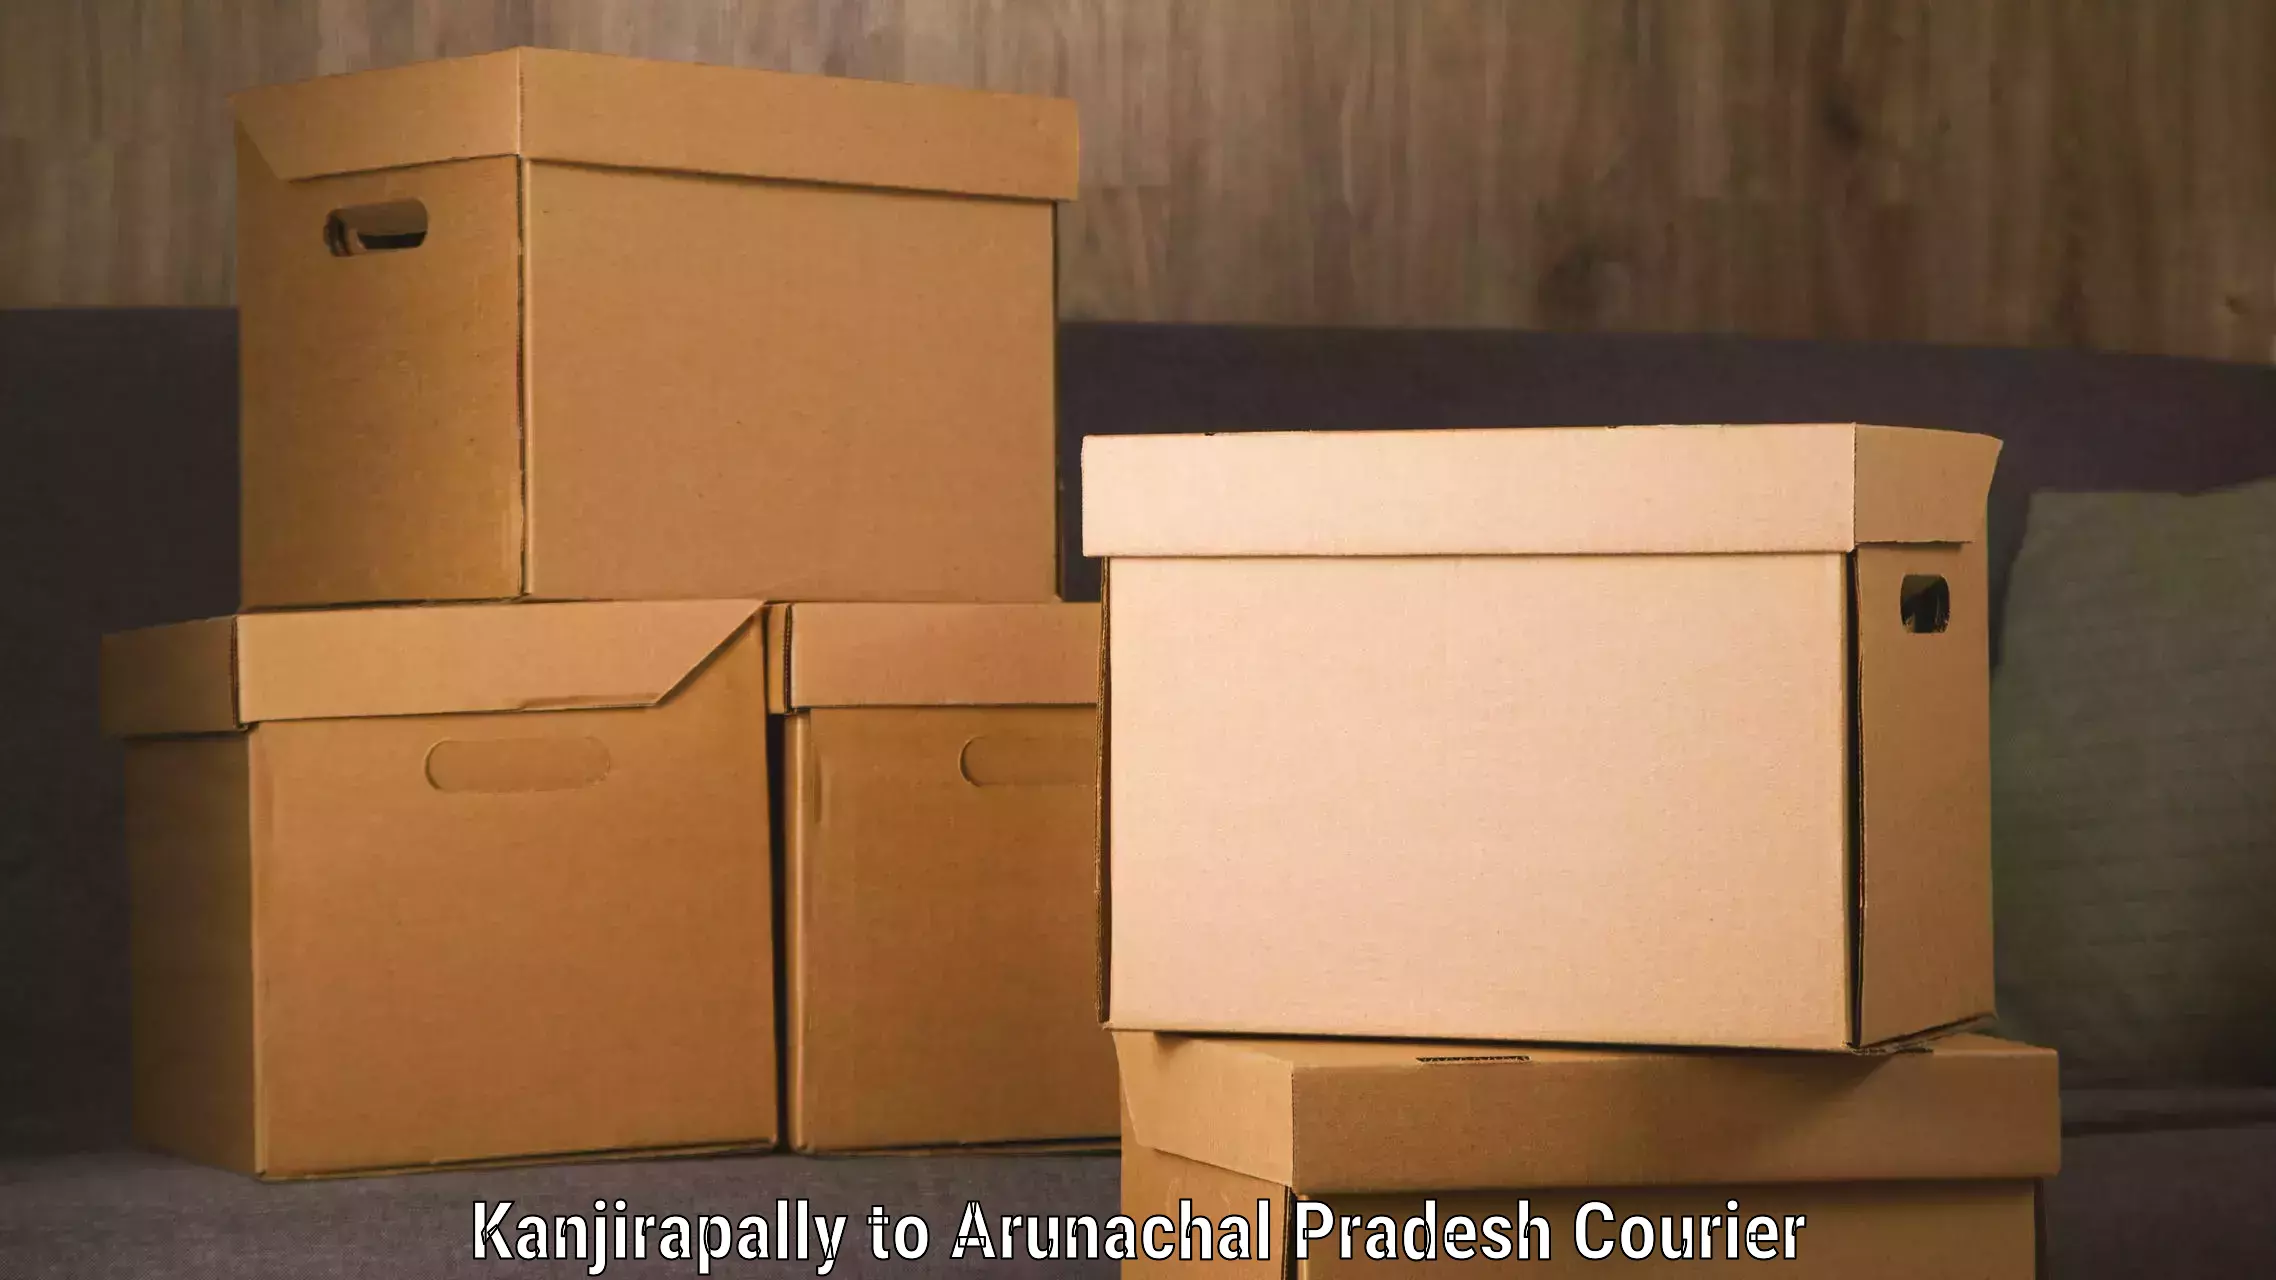 Enhanced tracking features in Kanjirapally to Arunachal Pradesh